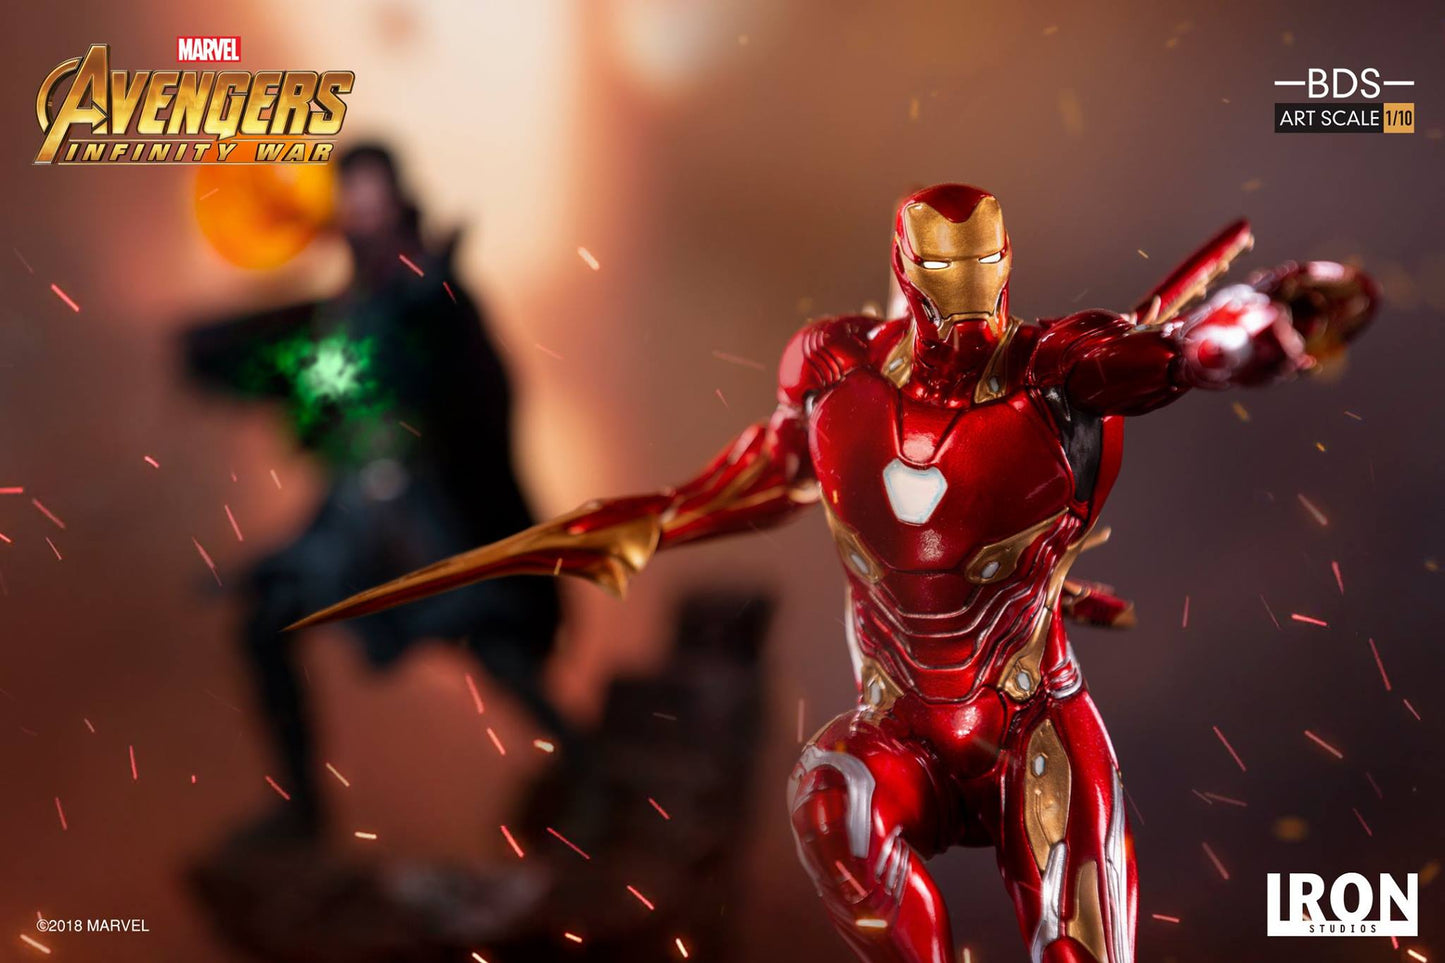 Iron Studios Art Scale 1/10 Marvel Avengers Infinity War Iron Man Mark 50